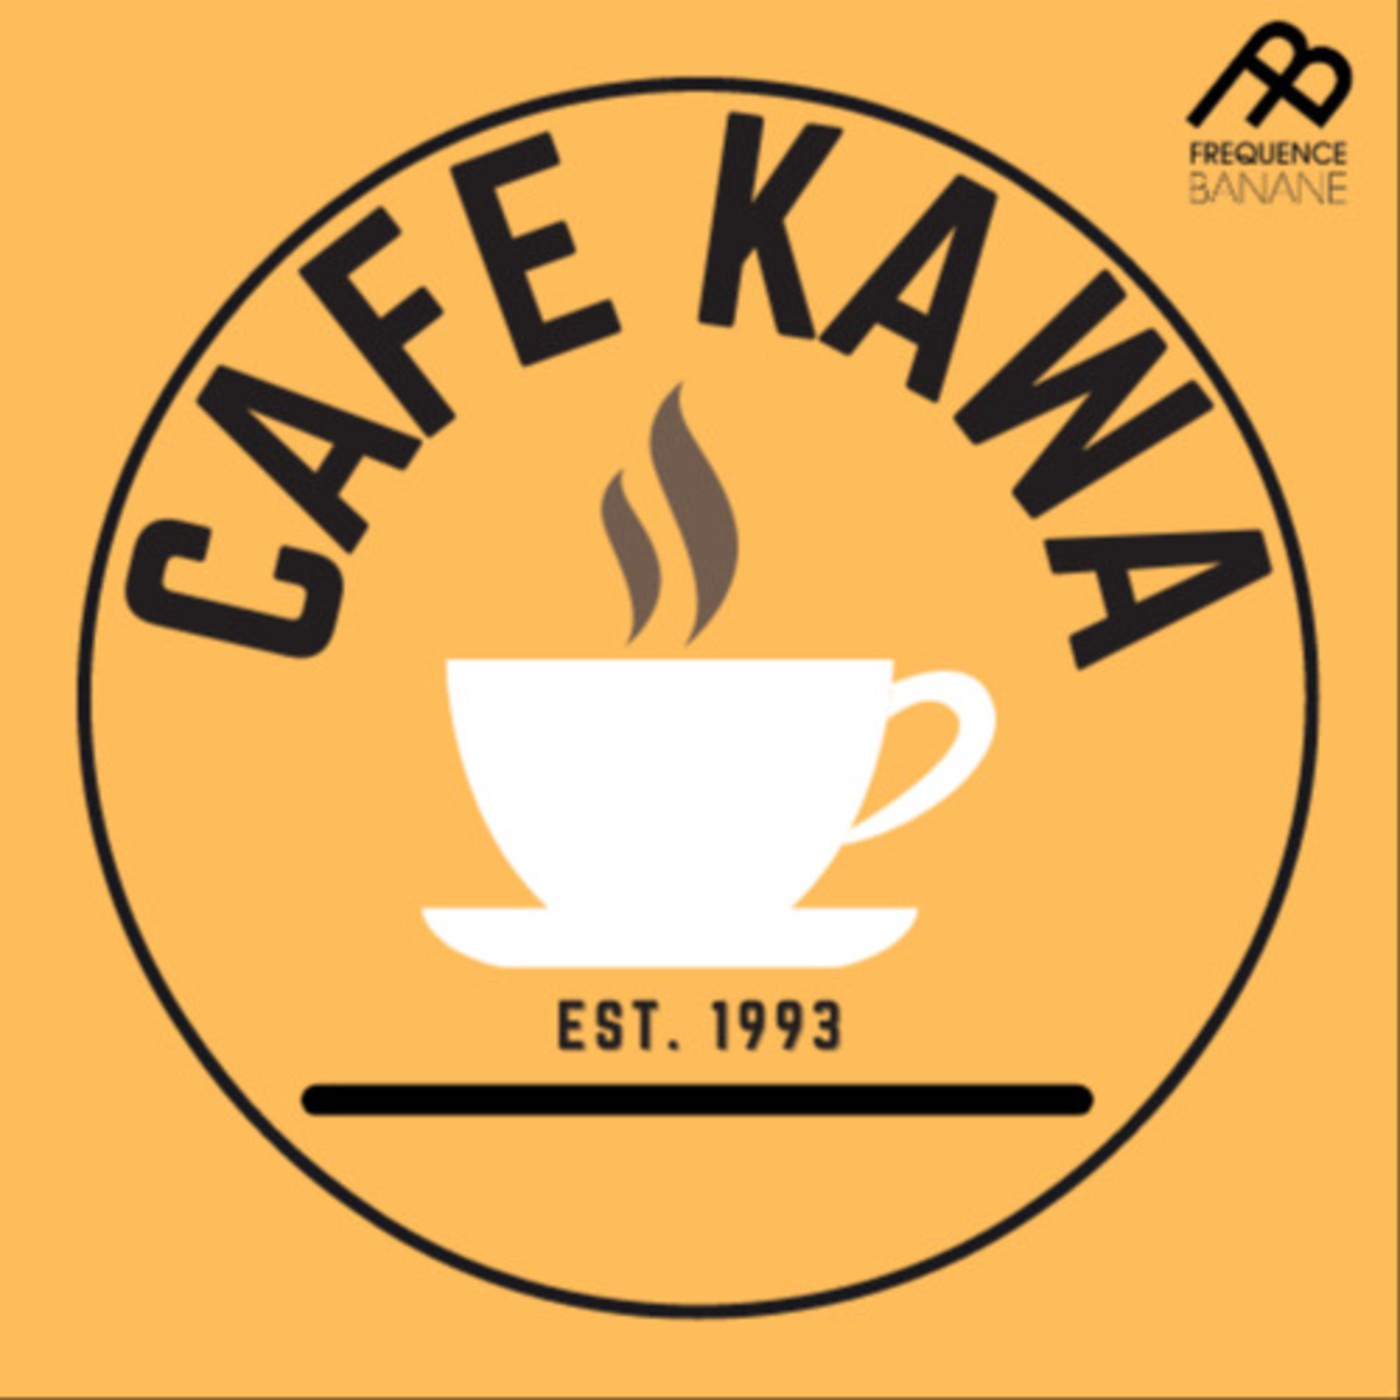 CaféKawa du 20/02 - Les DJ